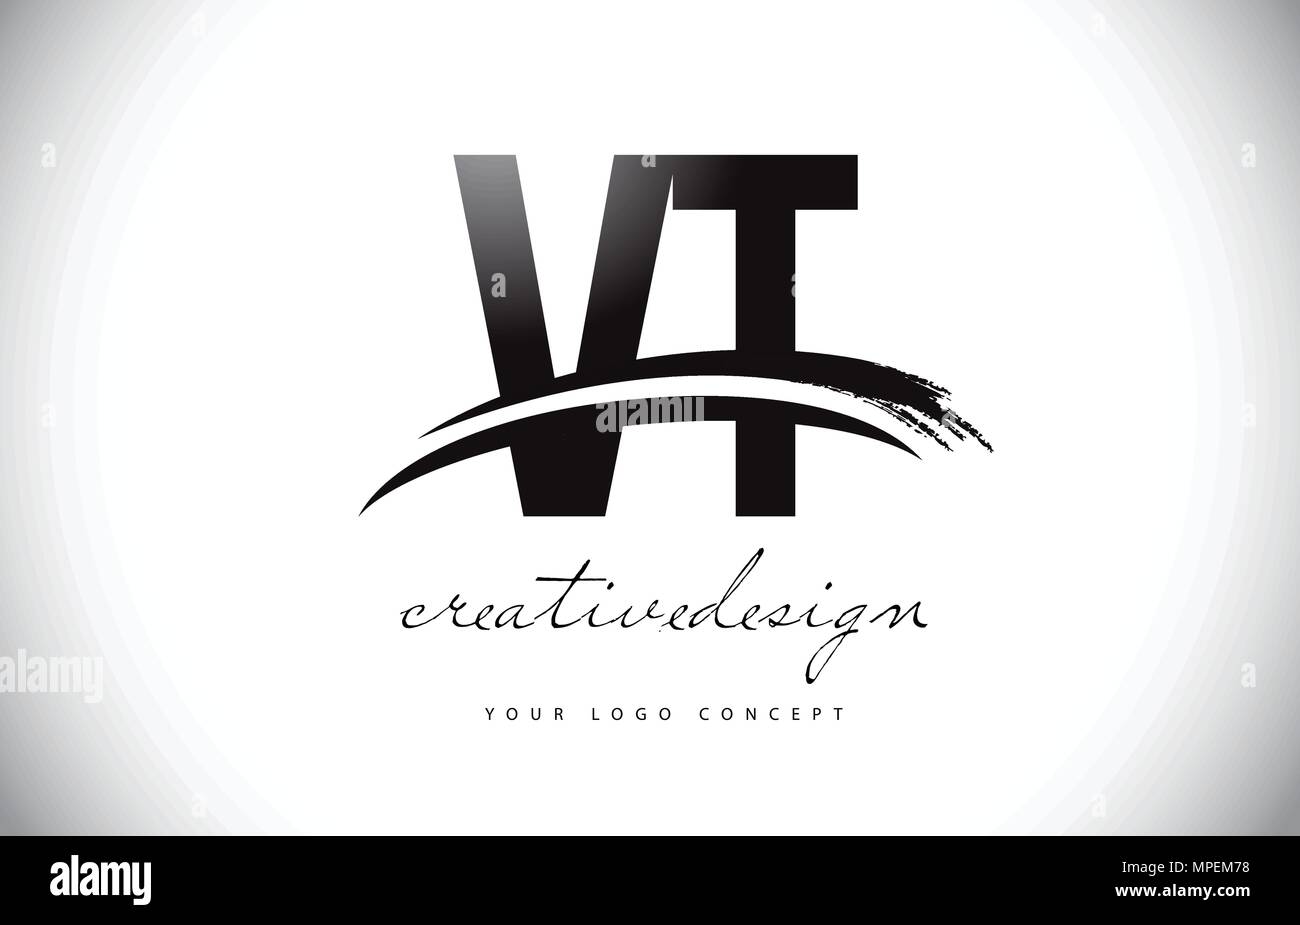 Vt V T Letter Logo Design With Swoosh And Black Brush Stroke